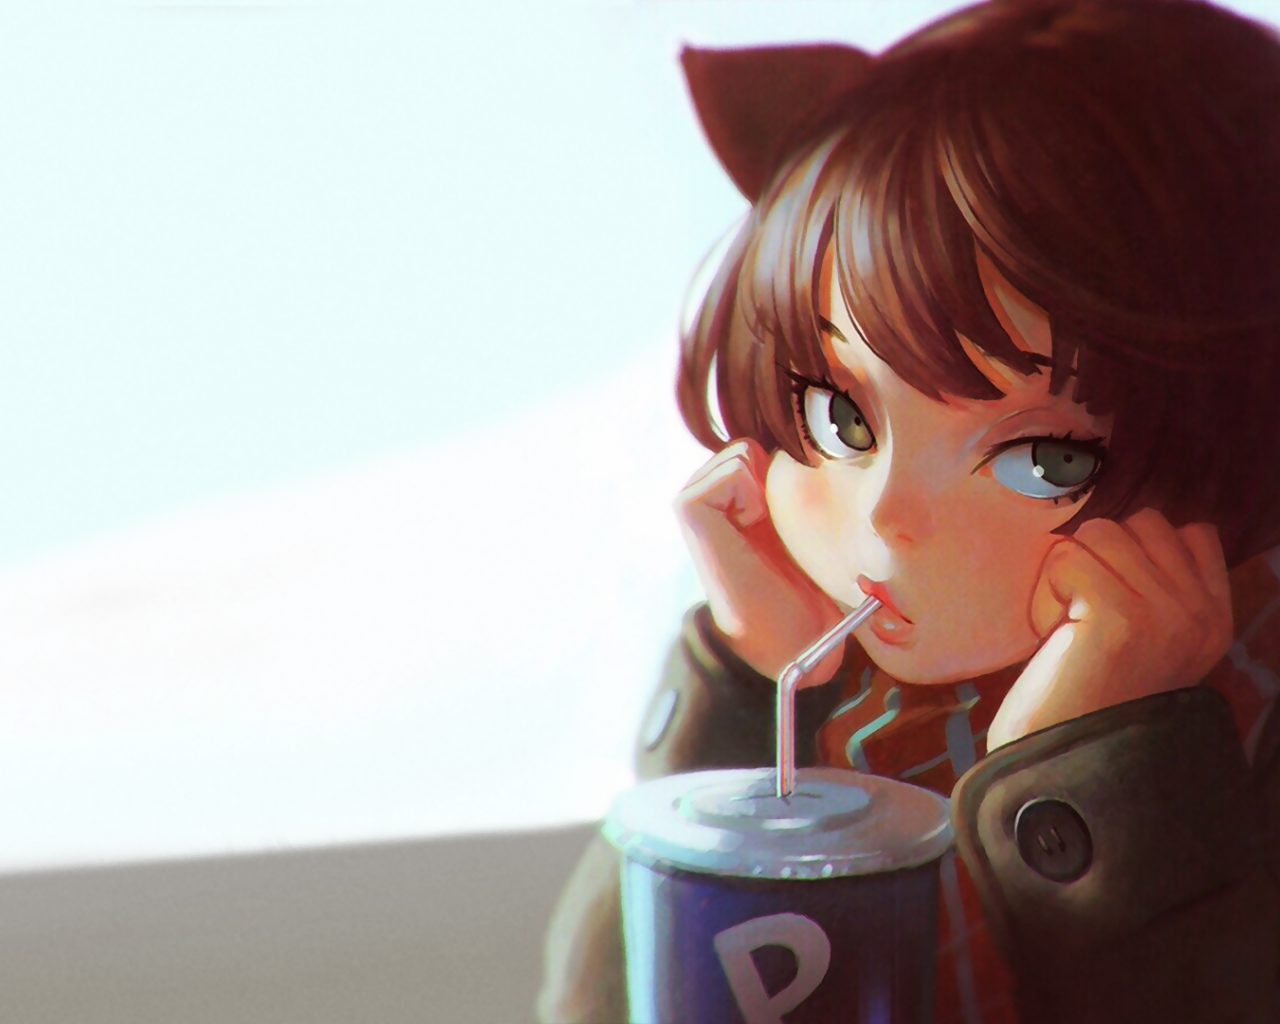 Desktop Wallpaper Cute Anime Girl Drinking Coffee Hd Image